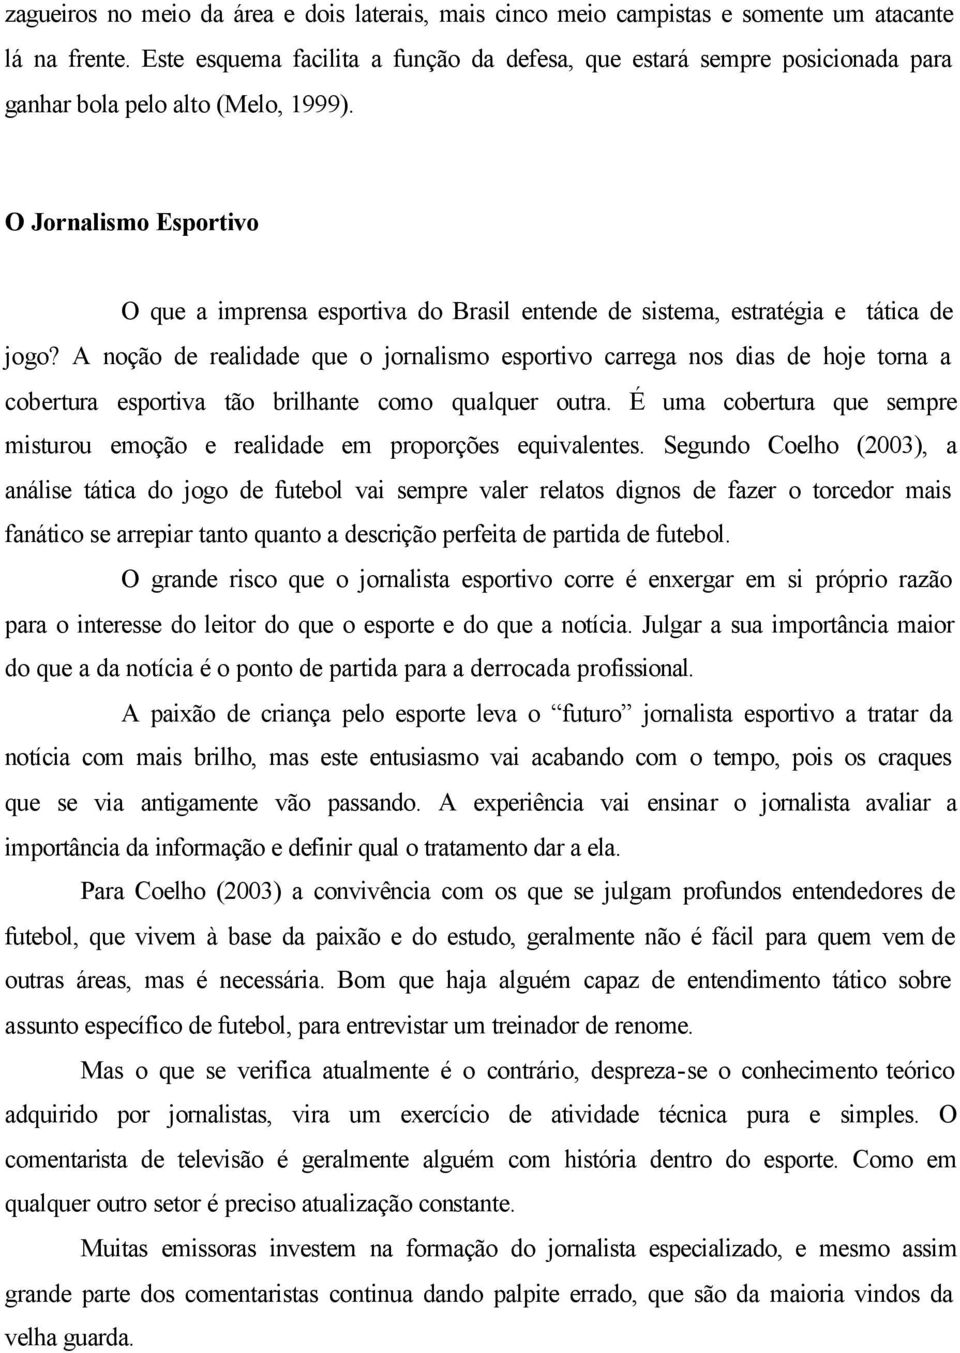 O Jornalismo Esportivo O que a imprensa esportiva do Brasil entende de sistema, estratégia e tática de jogo?